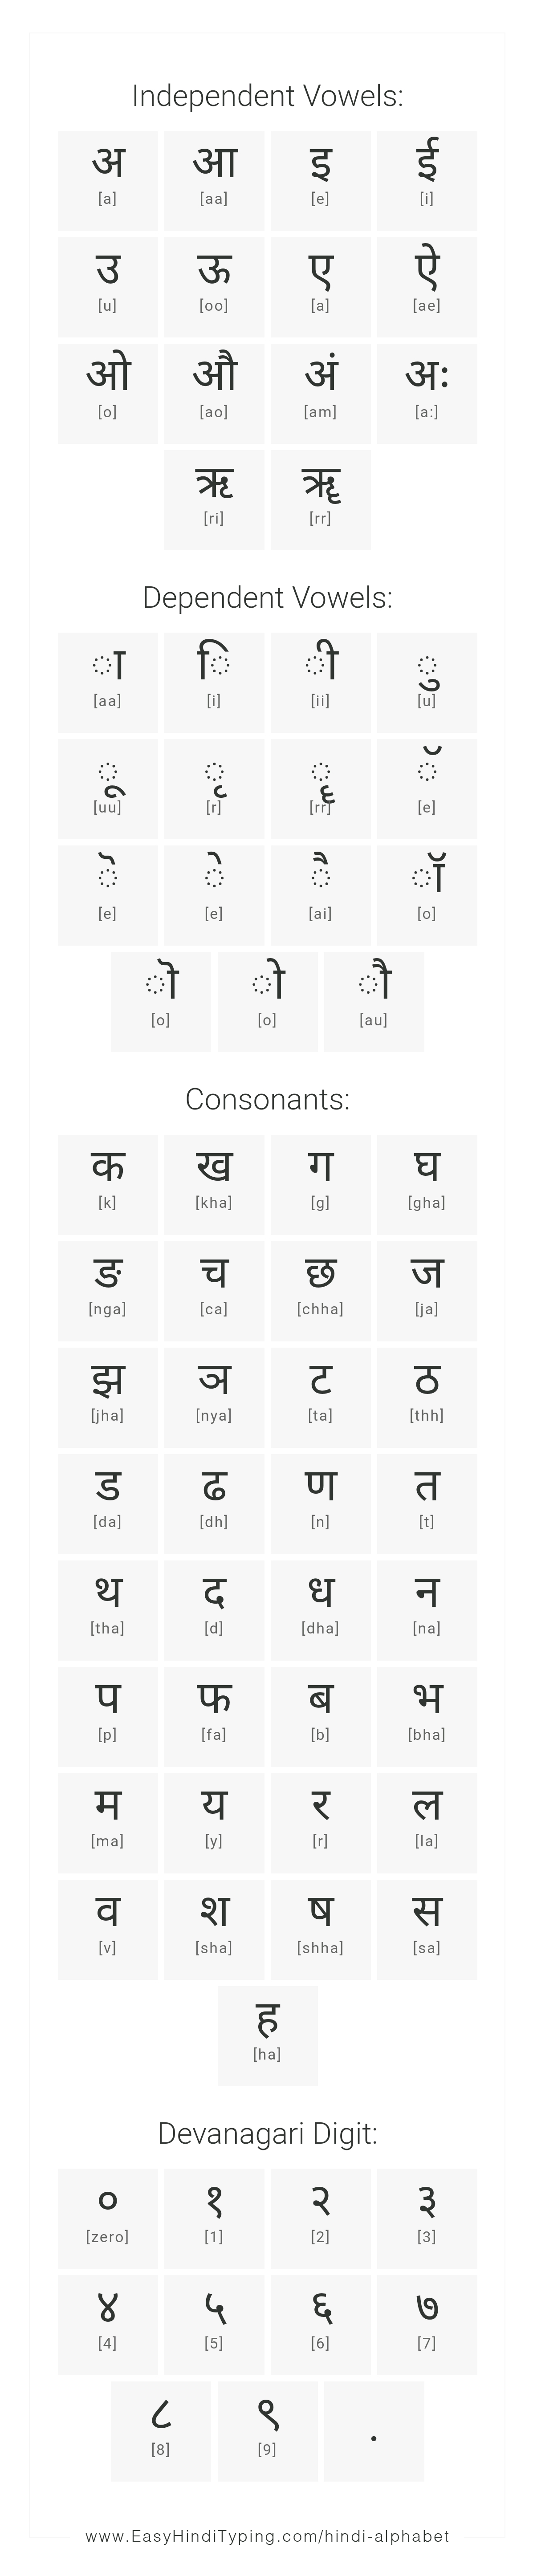 bengali and hindi alphabets together